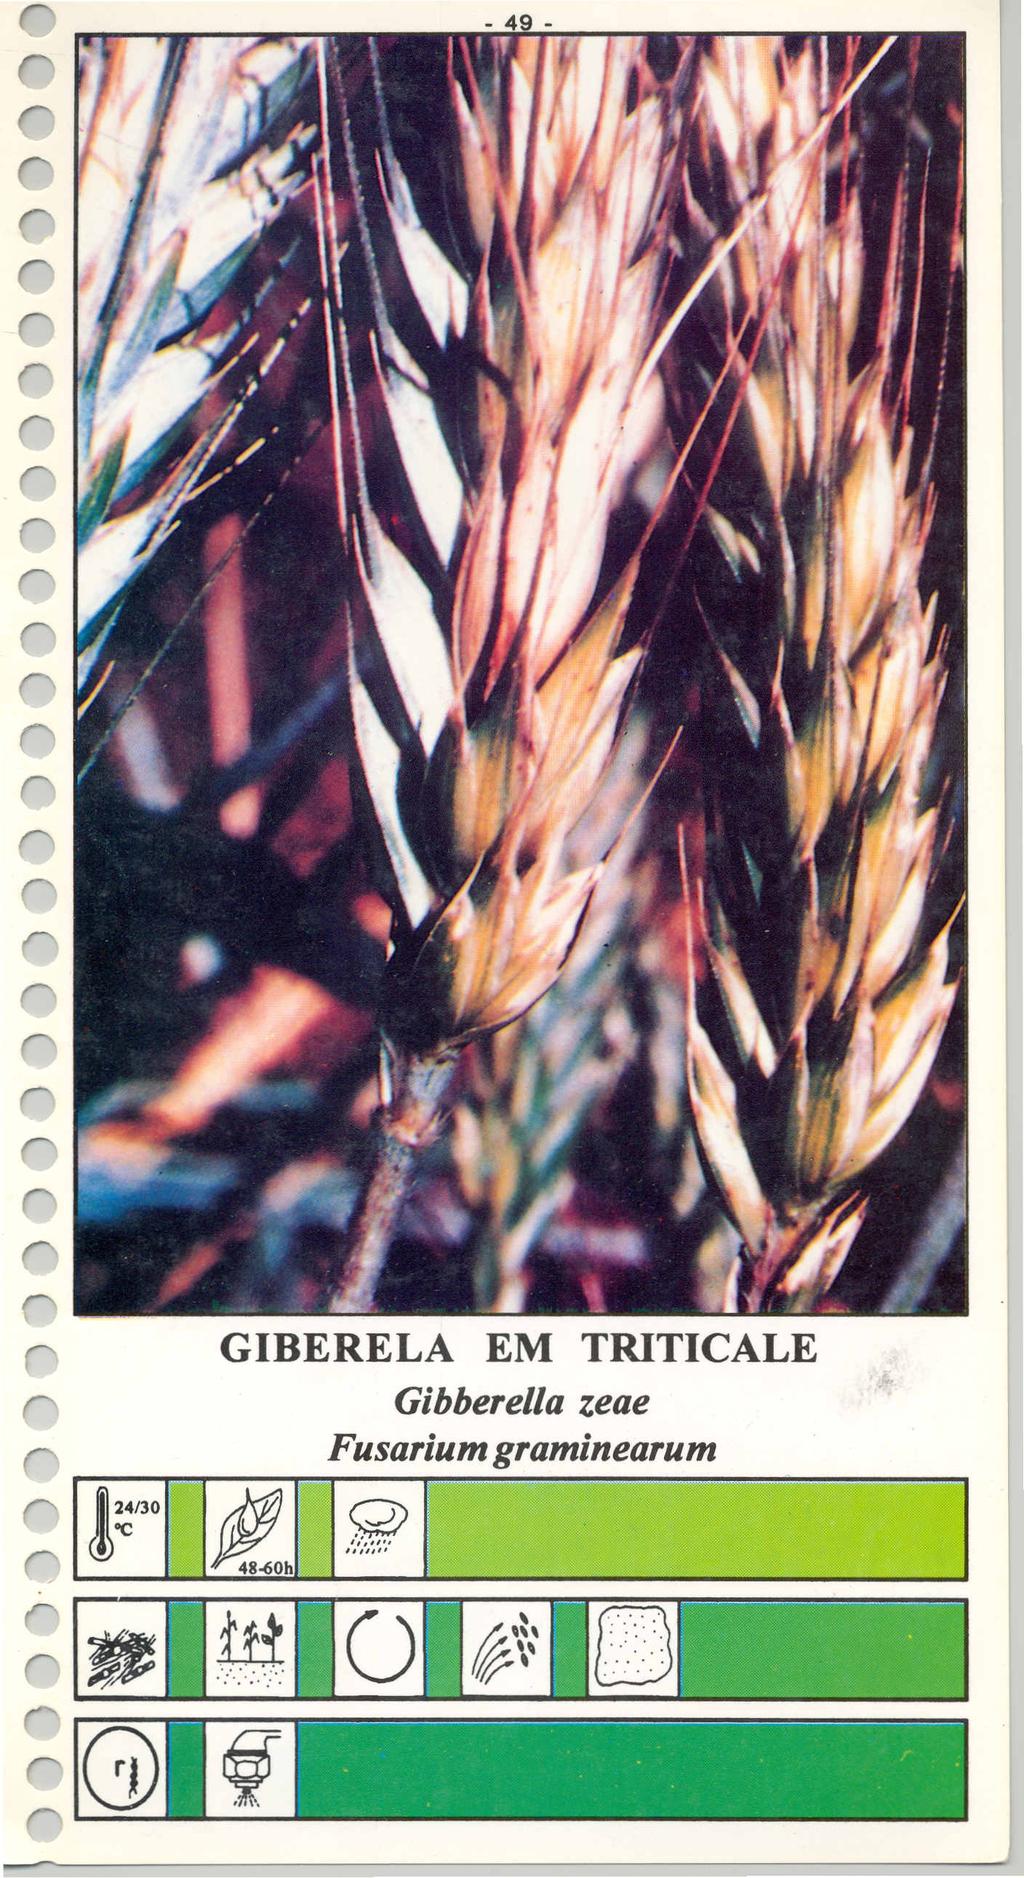 ~I GIBERELA EM TRITICALE Gibberella zeae Fusarium graminearum